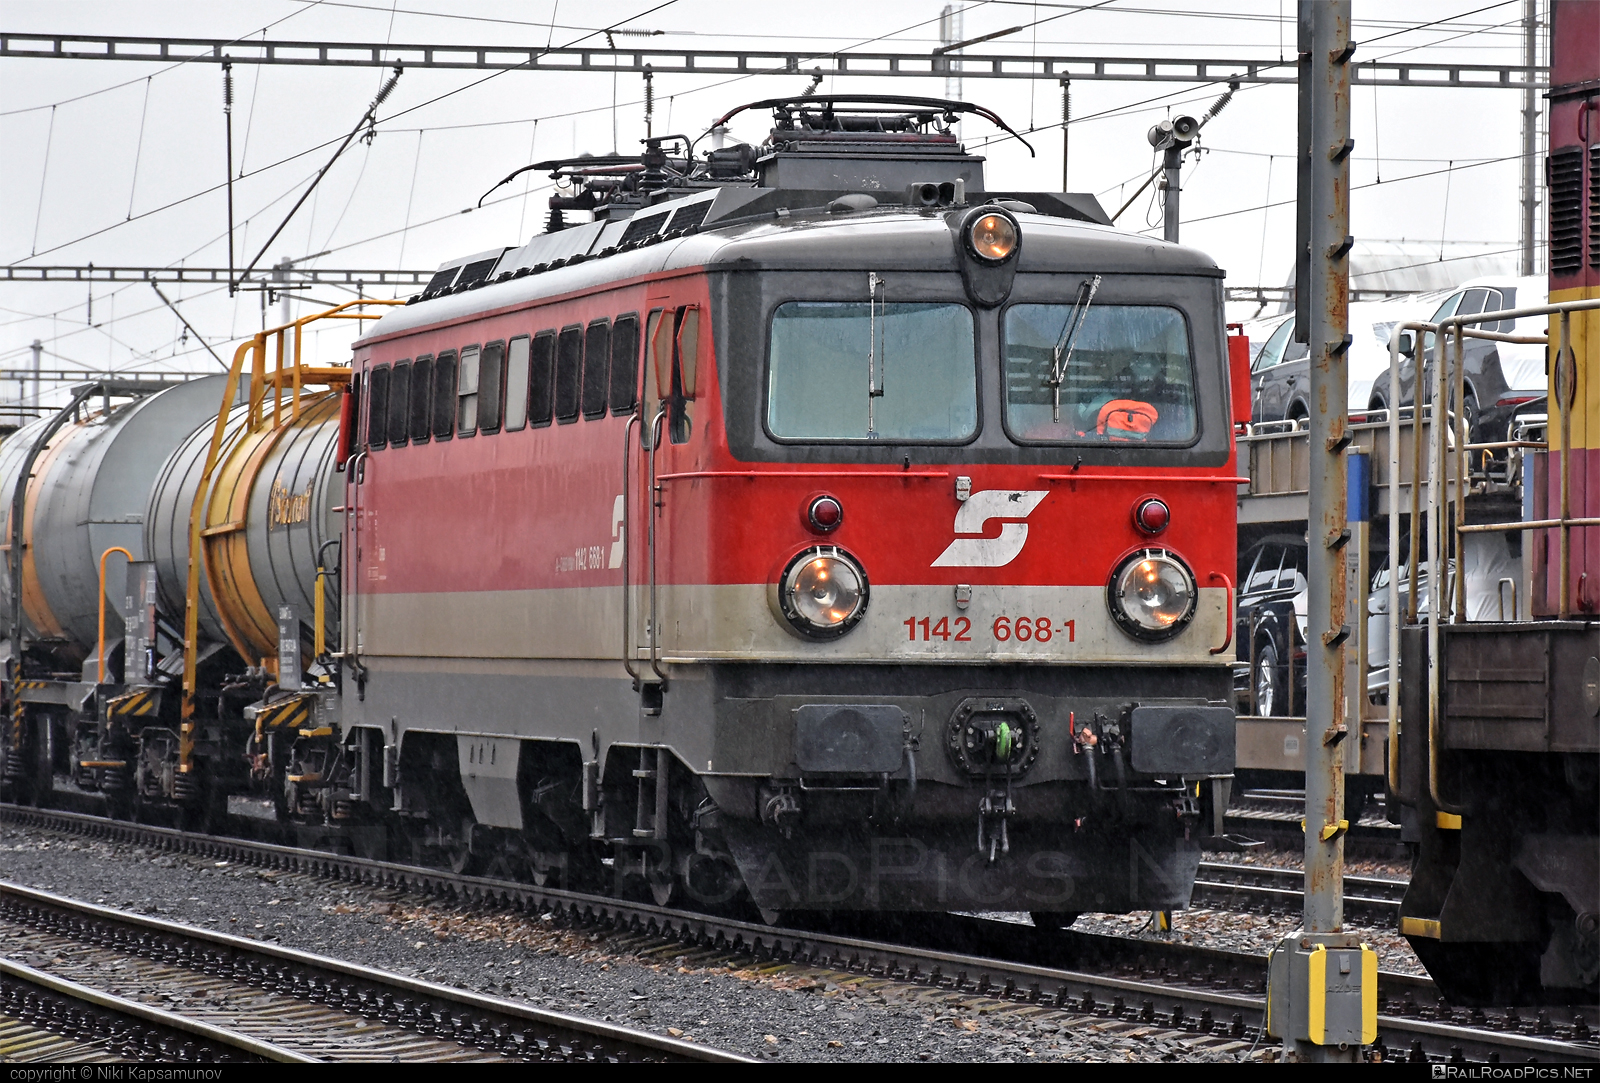 SGP ÖBB Class 1142 - 1142 668-1 operated by Rail Cargo Austria AG #kesselwagen #obb #obbclass1142 #osterreichischebundesbahnen #rcw #sgp #sgp1142 #simmeringgrazpauker #tankwagon